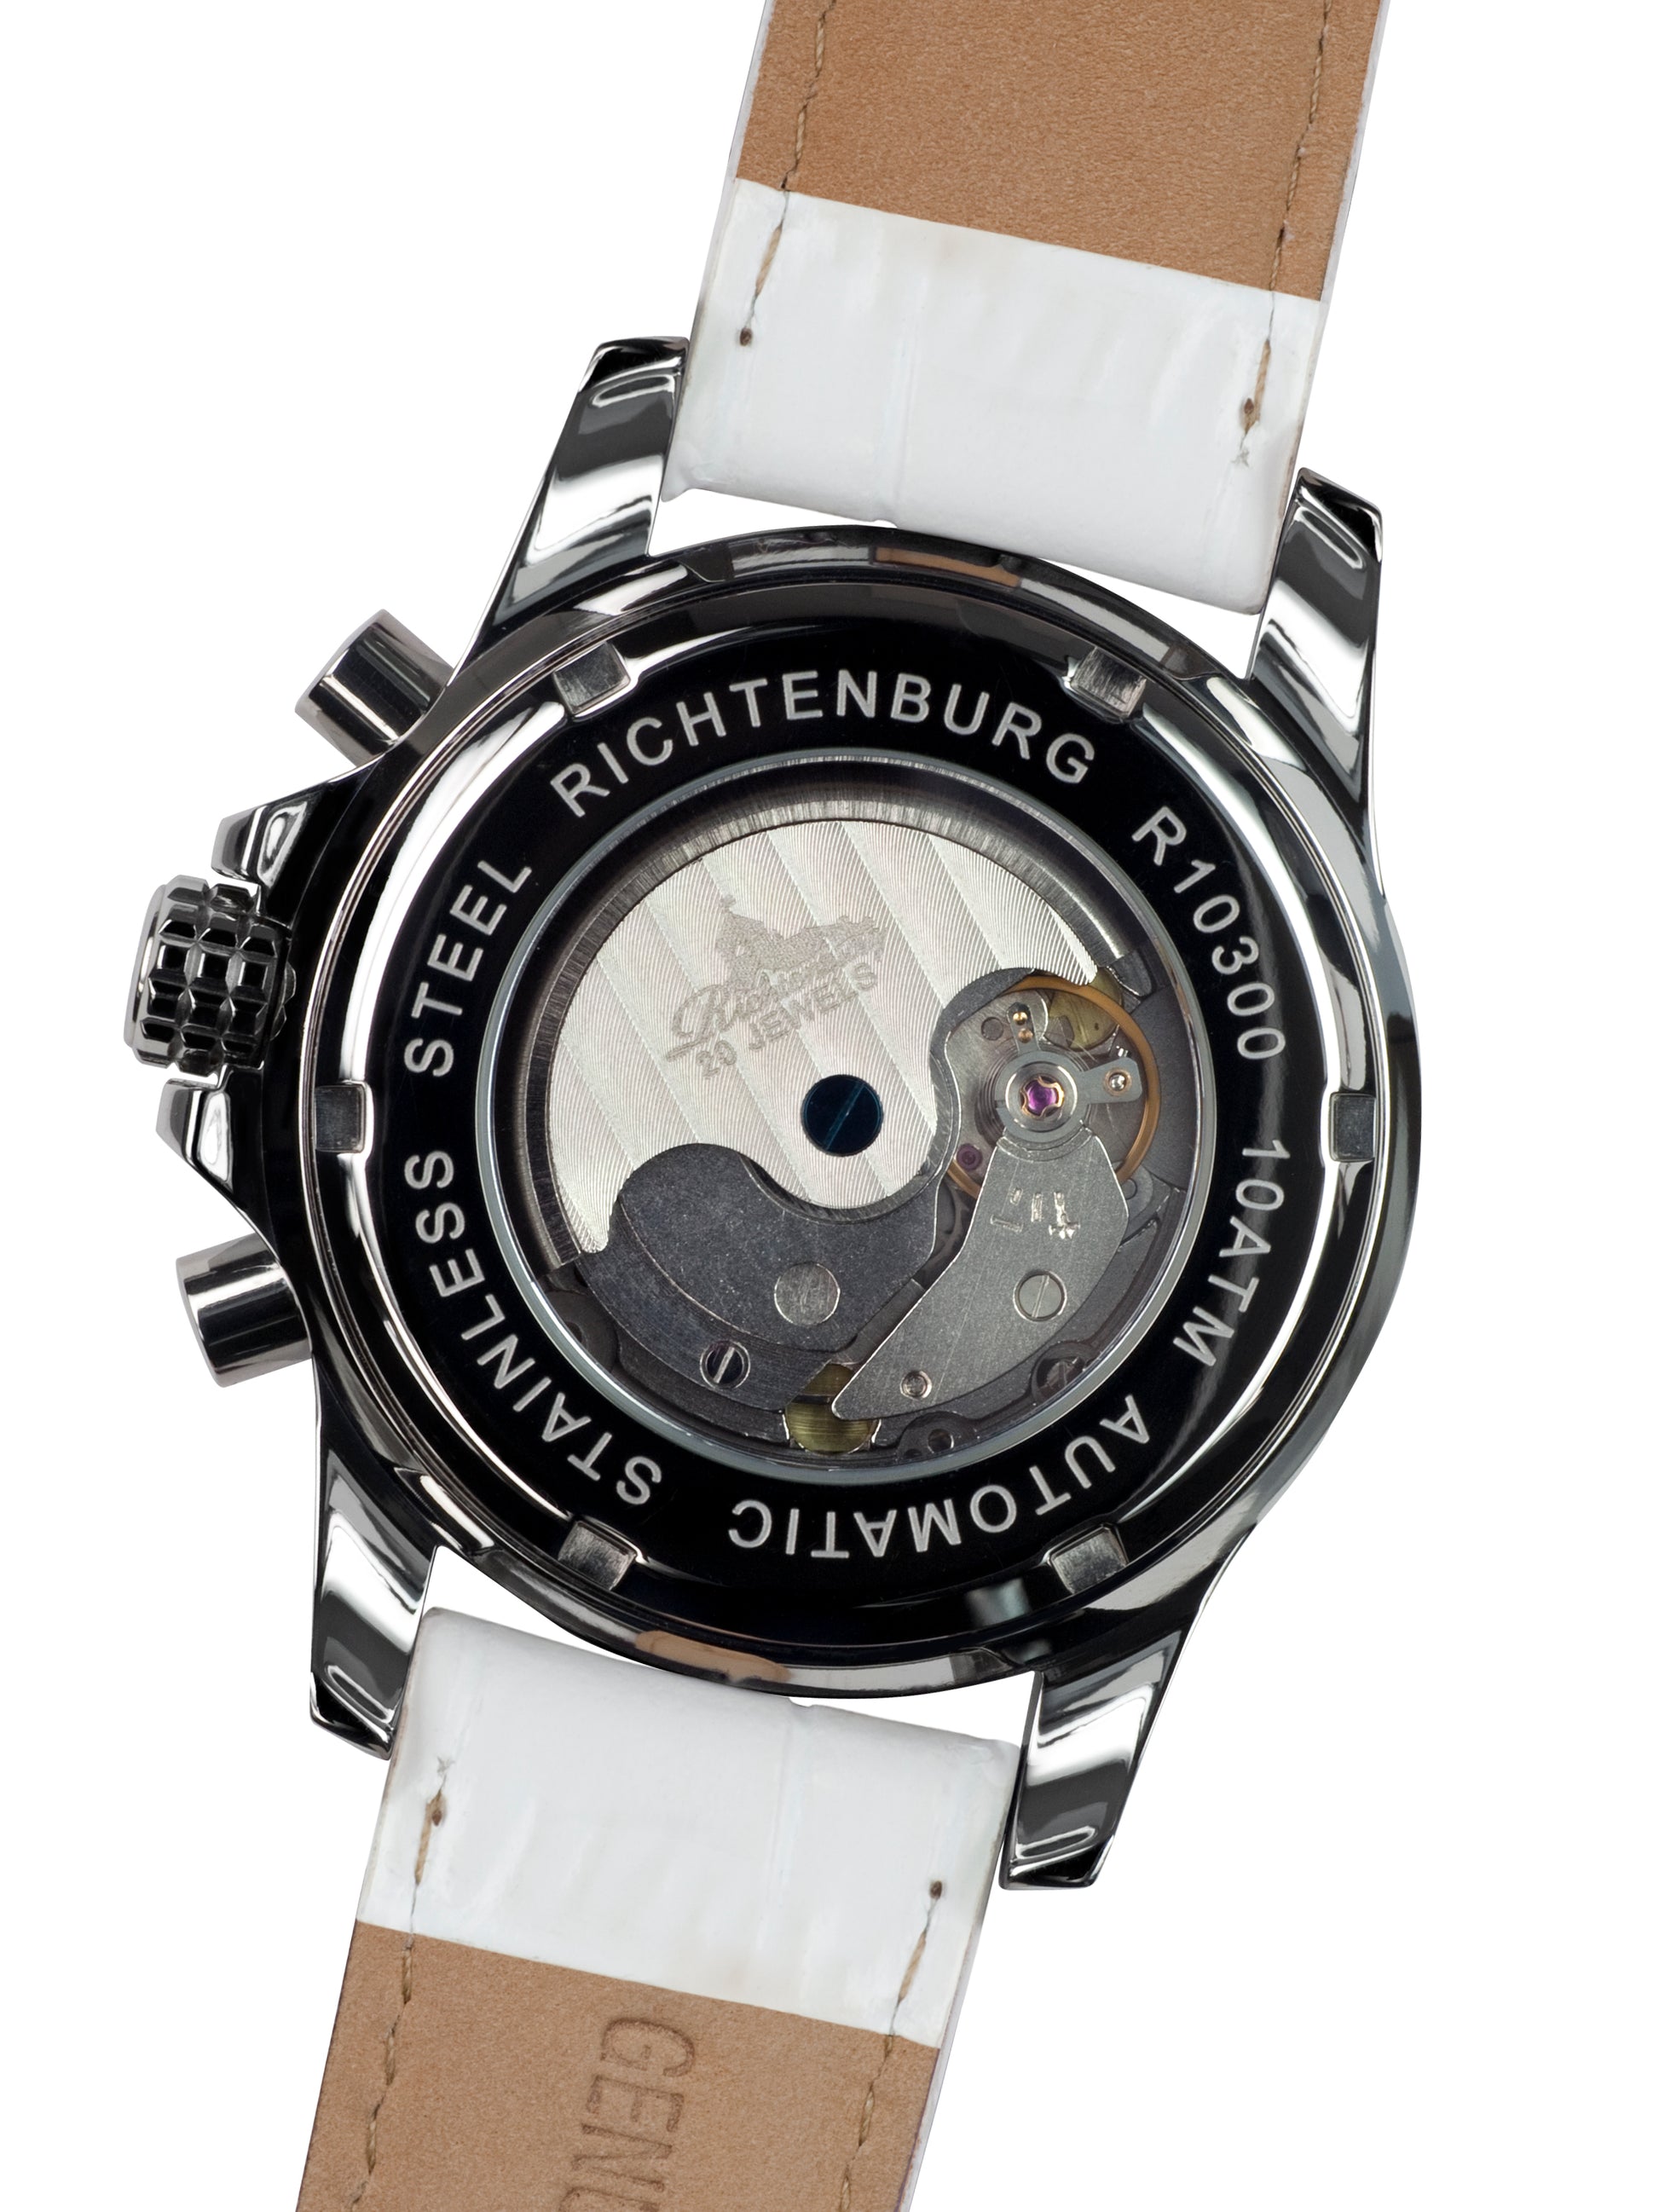 Automatic watches — Romantica — Richtenburg — white